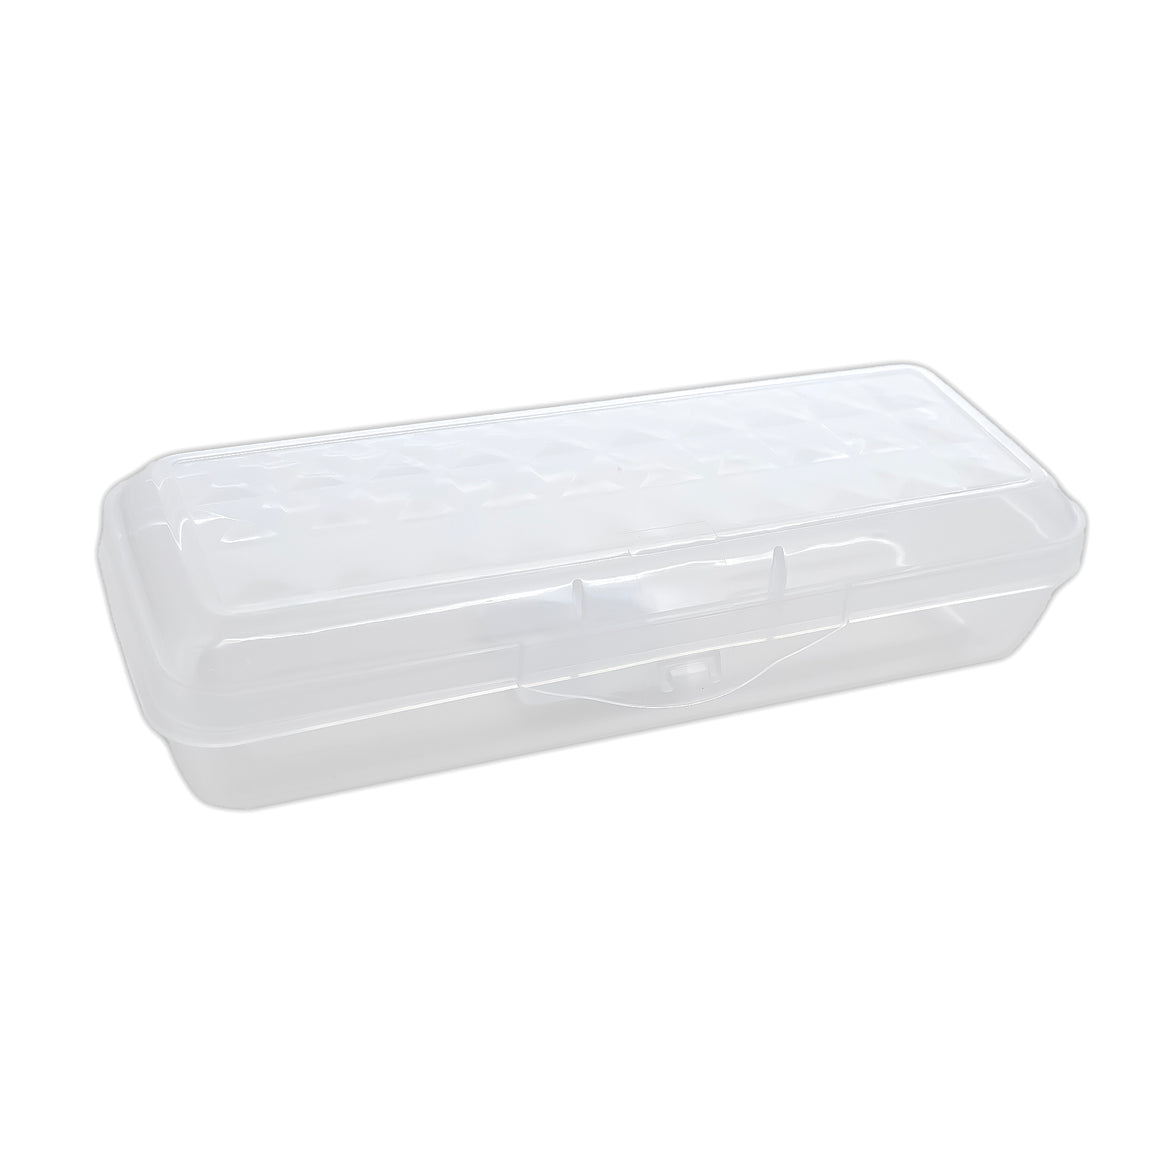 8" LUCENT Clear Pencil Case Organizer Box